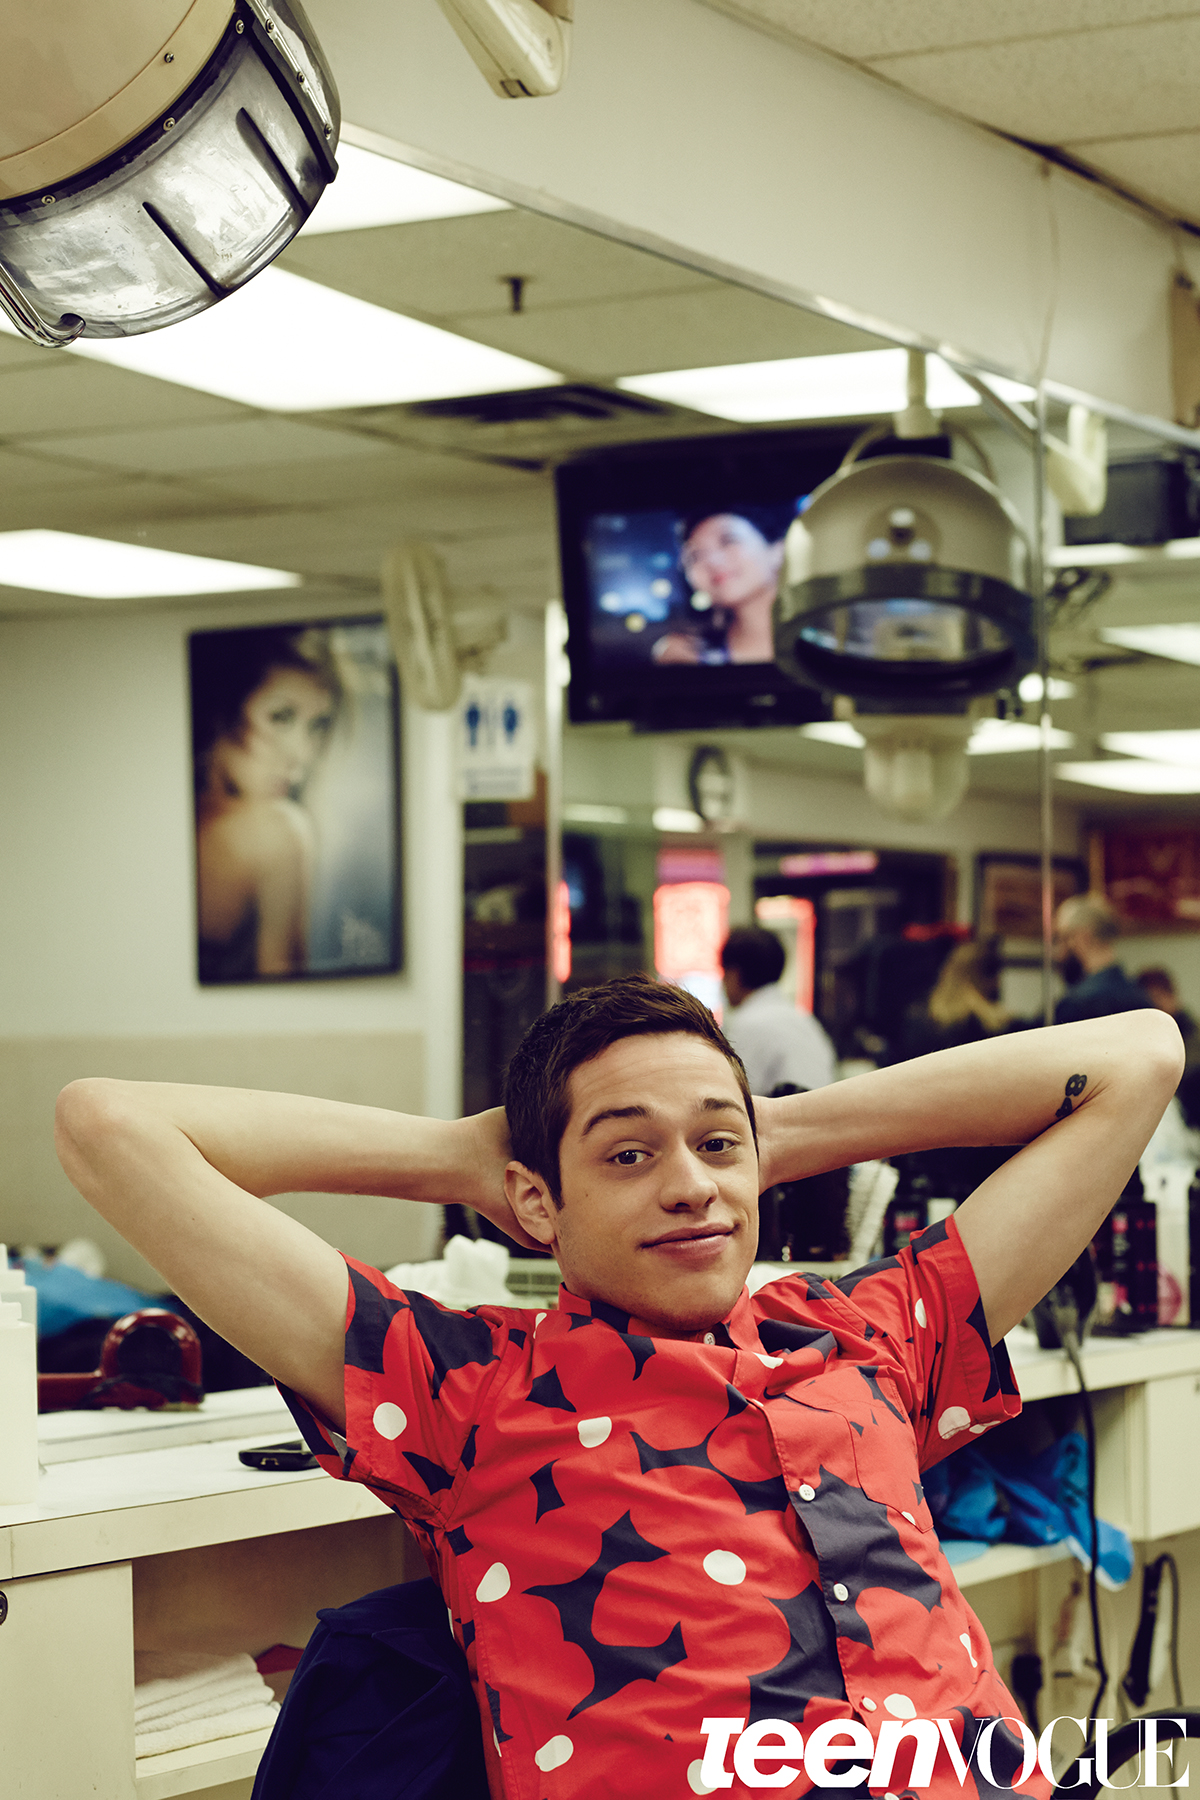  Pete Davidson - Teen Vogue Photoshoot - January 2015